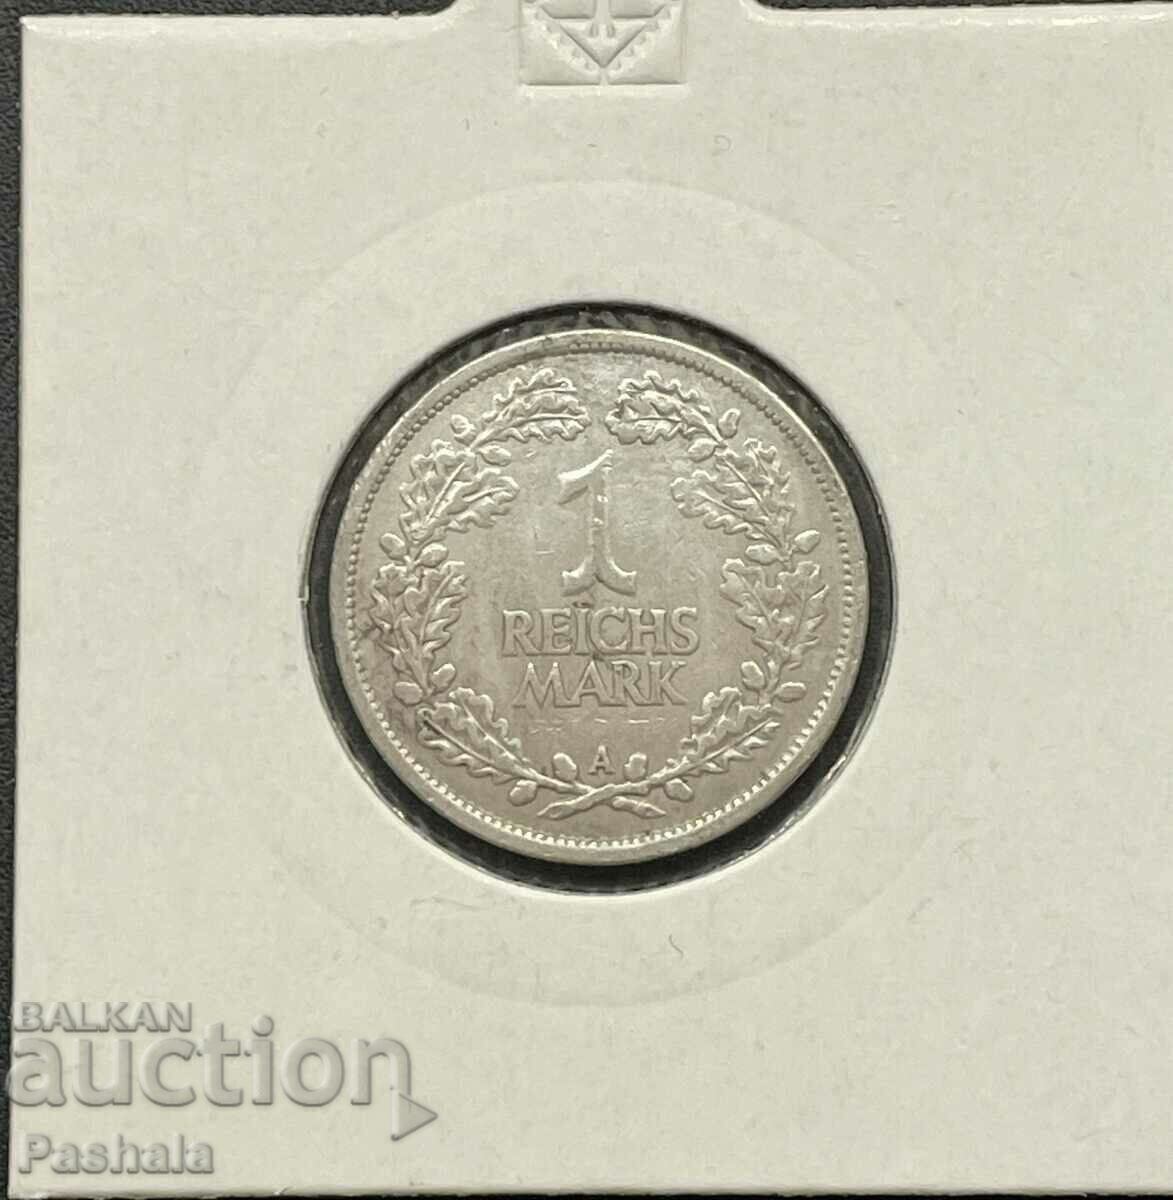 Germany 1 mark 1925 silver